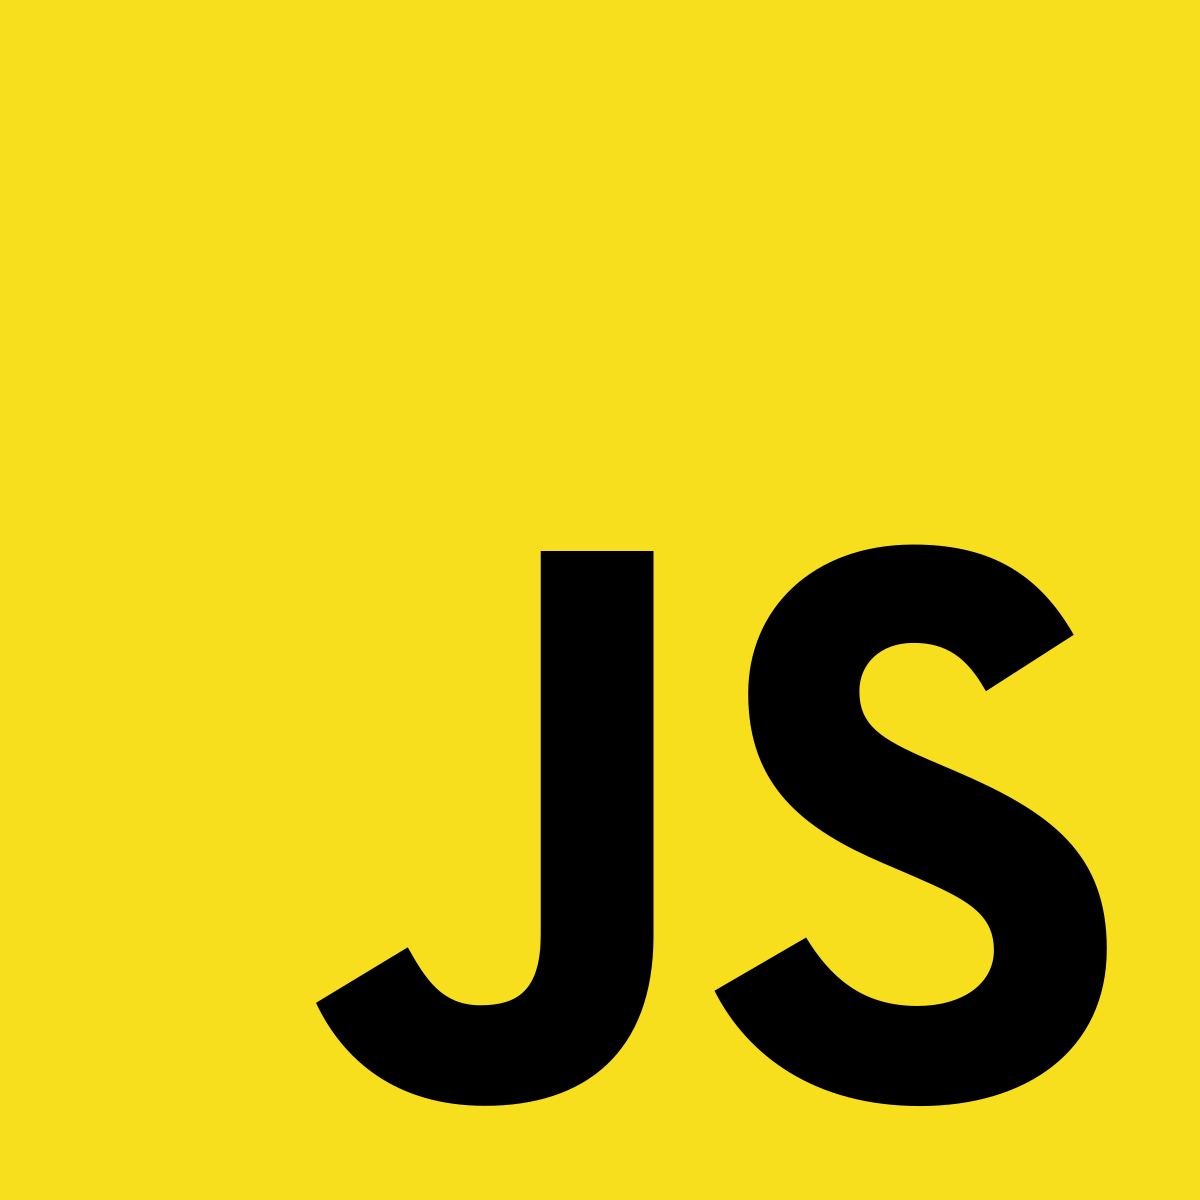 Herramientas Full Stack Web - Java Script